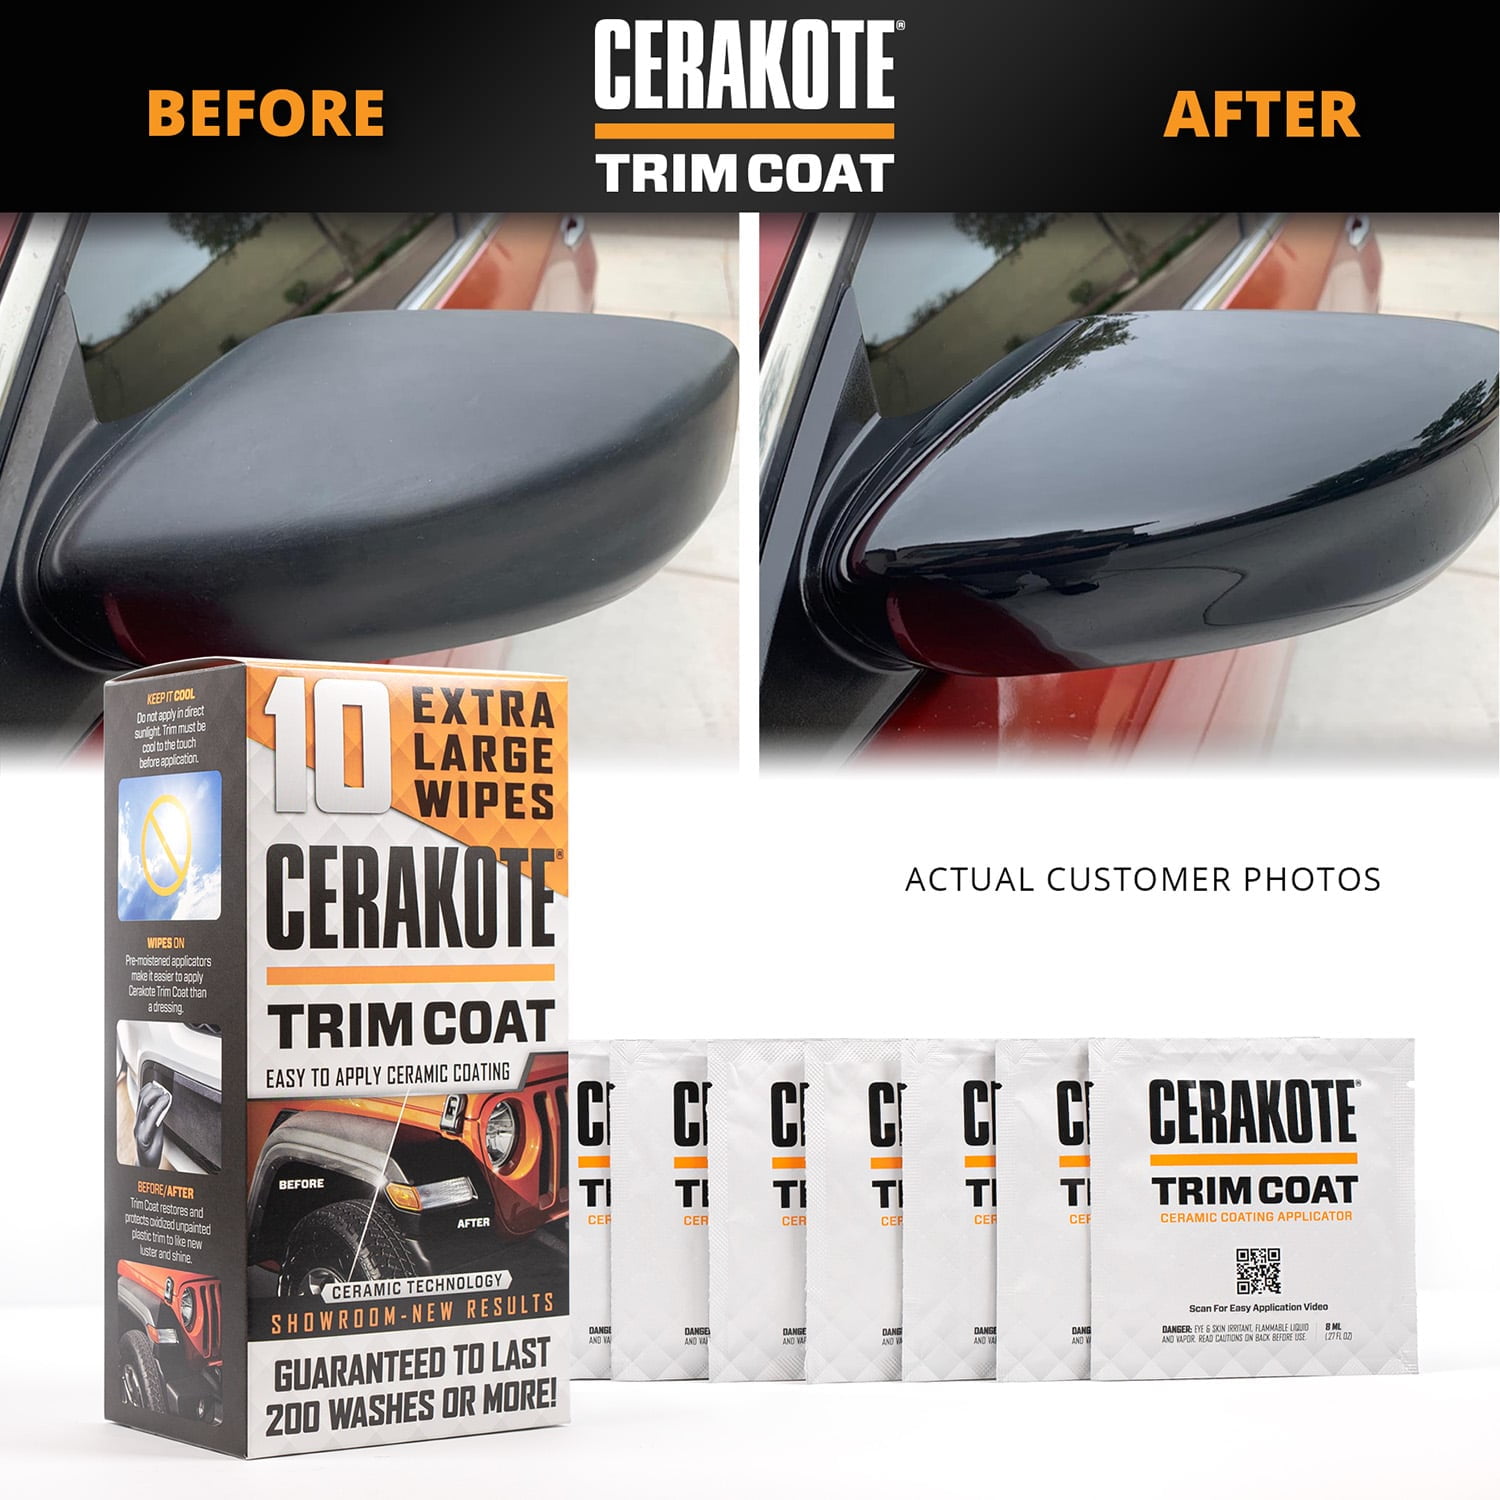 Cerakote Ceramic Trim Coat good for 200 car washings REALLY?! 